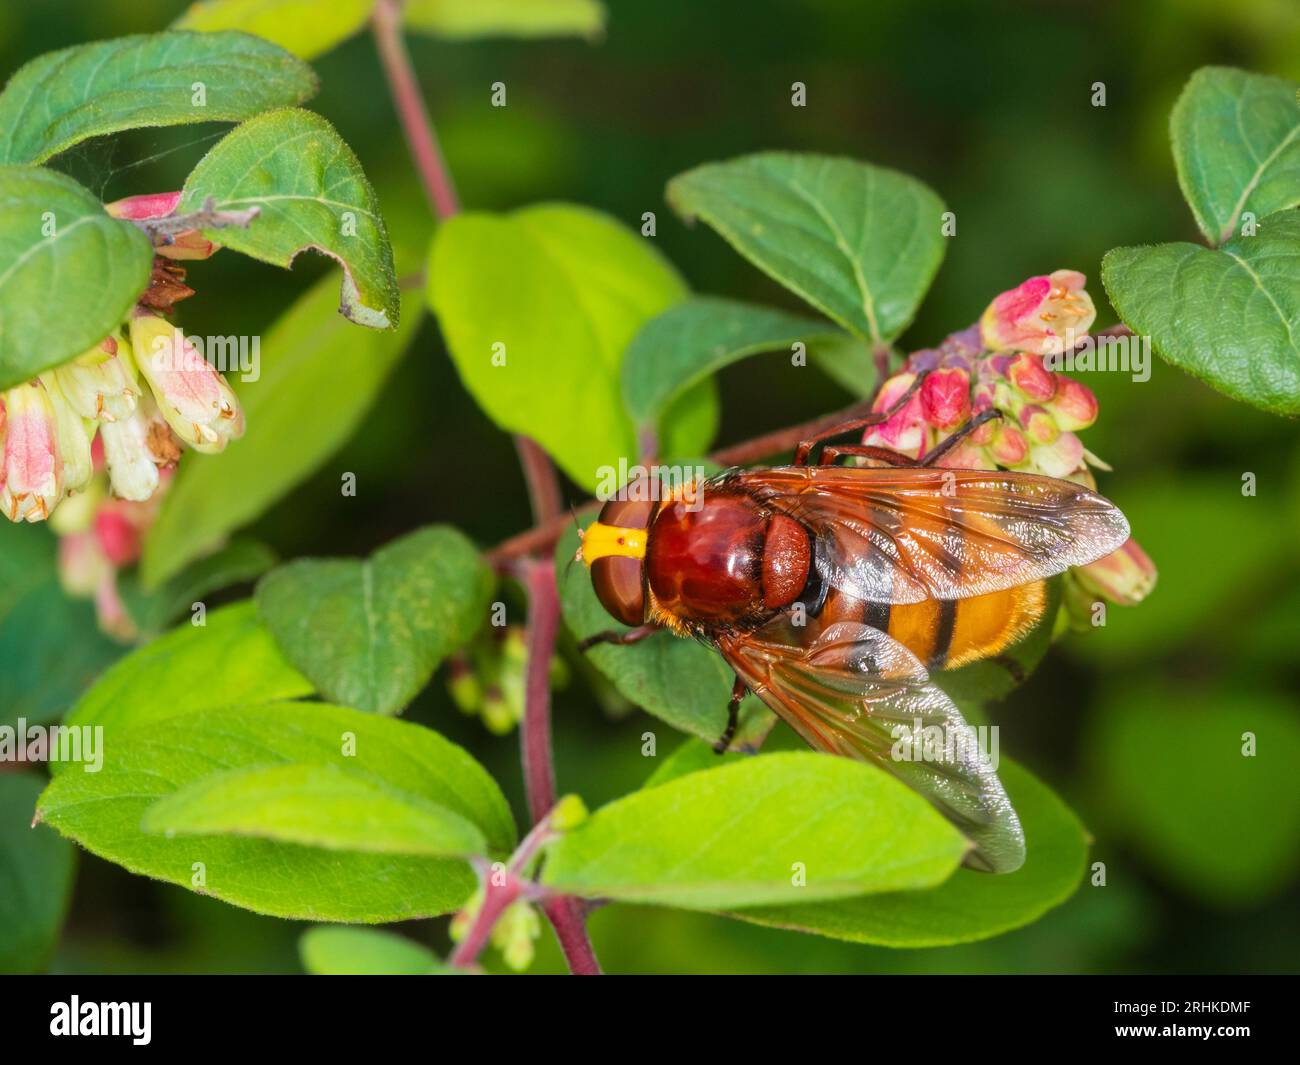 Female hornet mimic UK hoverfly, Volucella zonaria, on the flowers of snowberry, Symphoricarpus albus Stock Photo